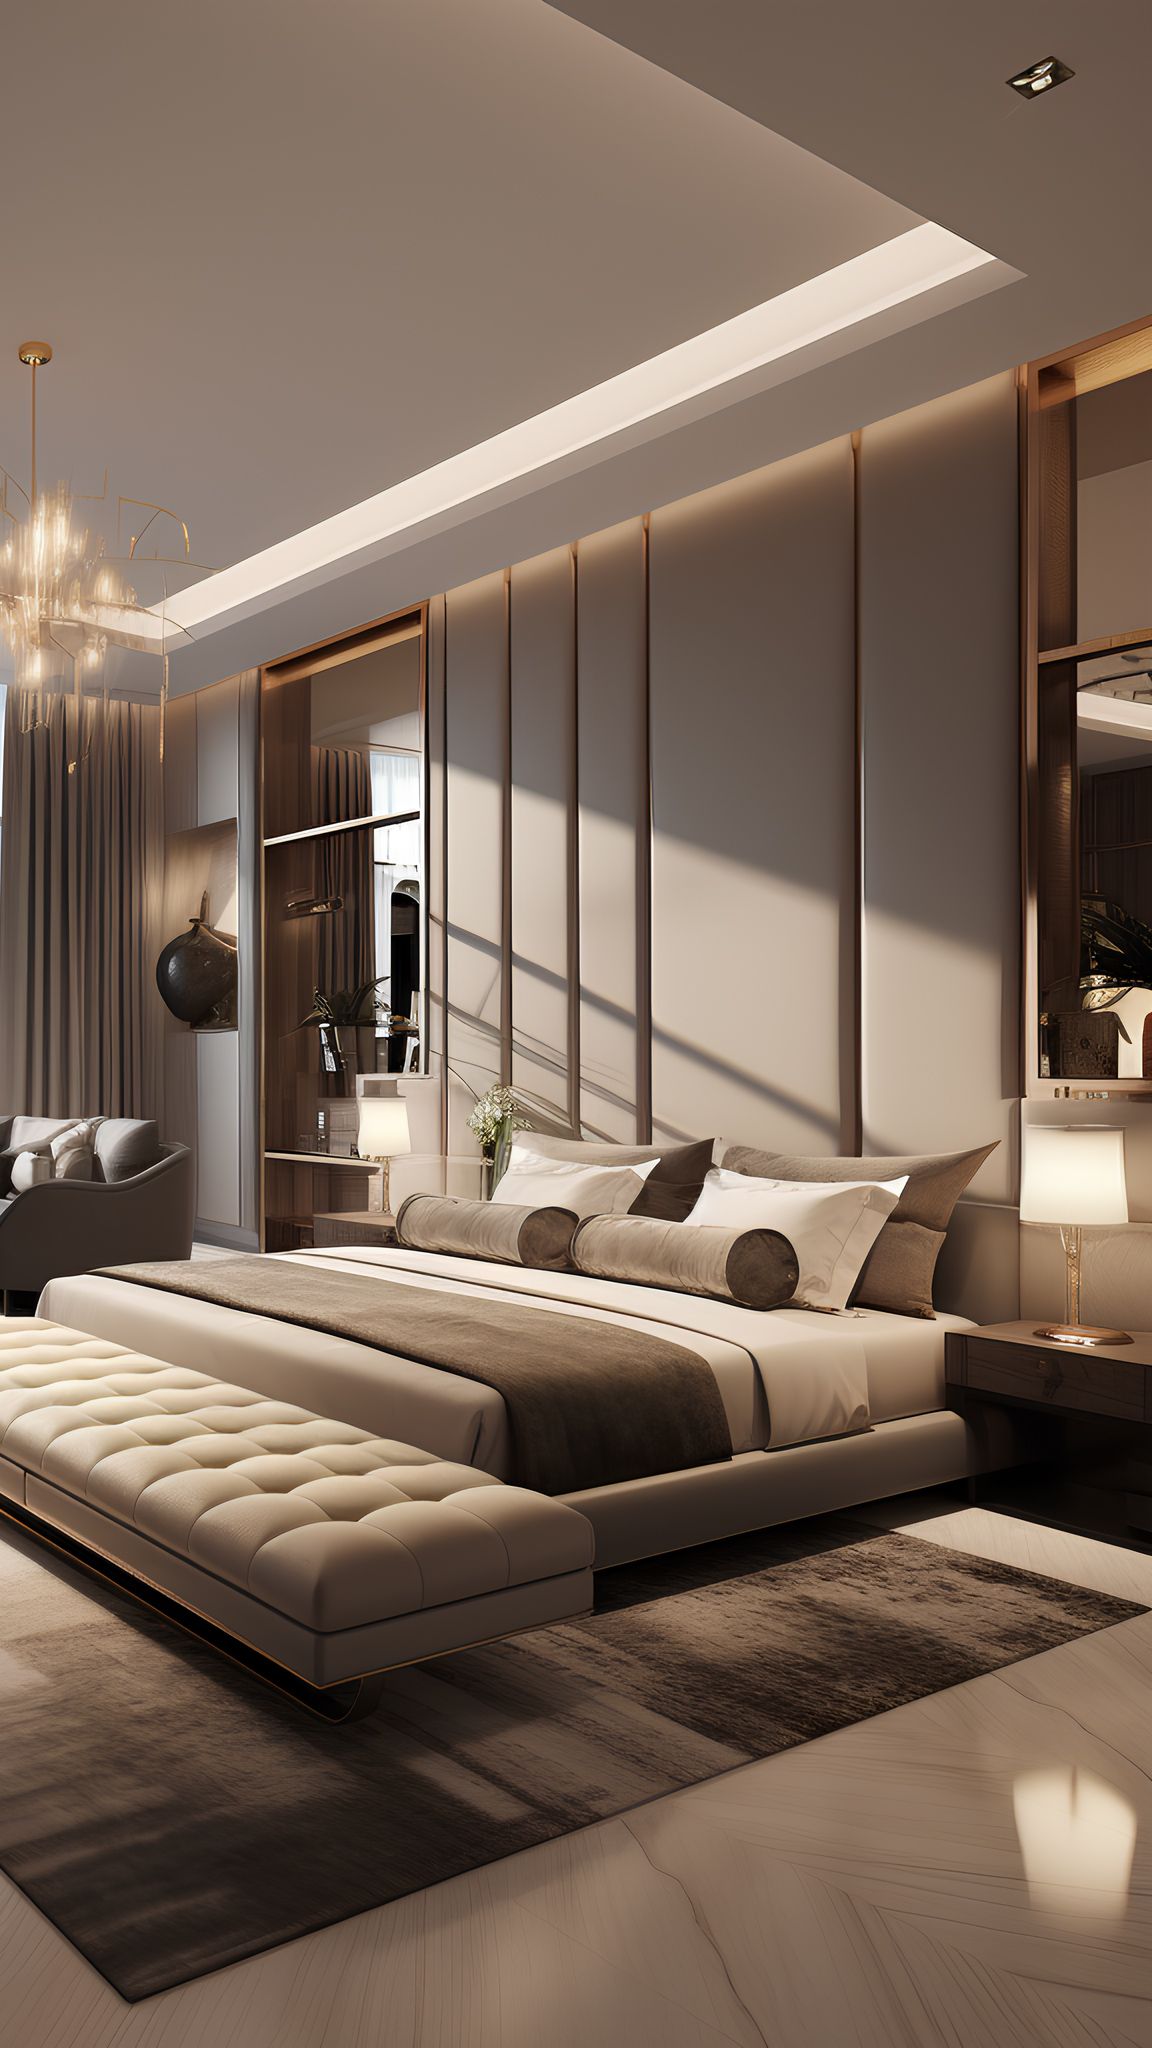 Stunning Contemporary Bedroom Design Ideas